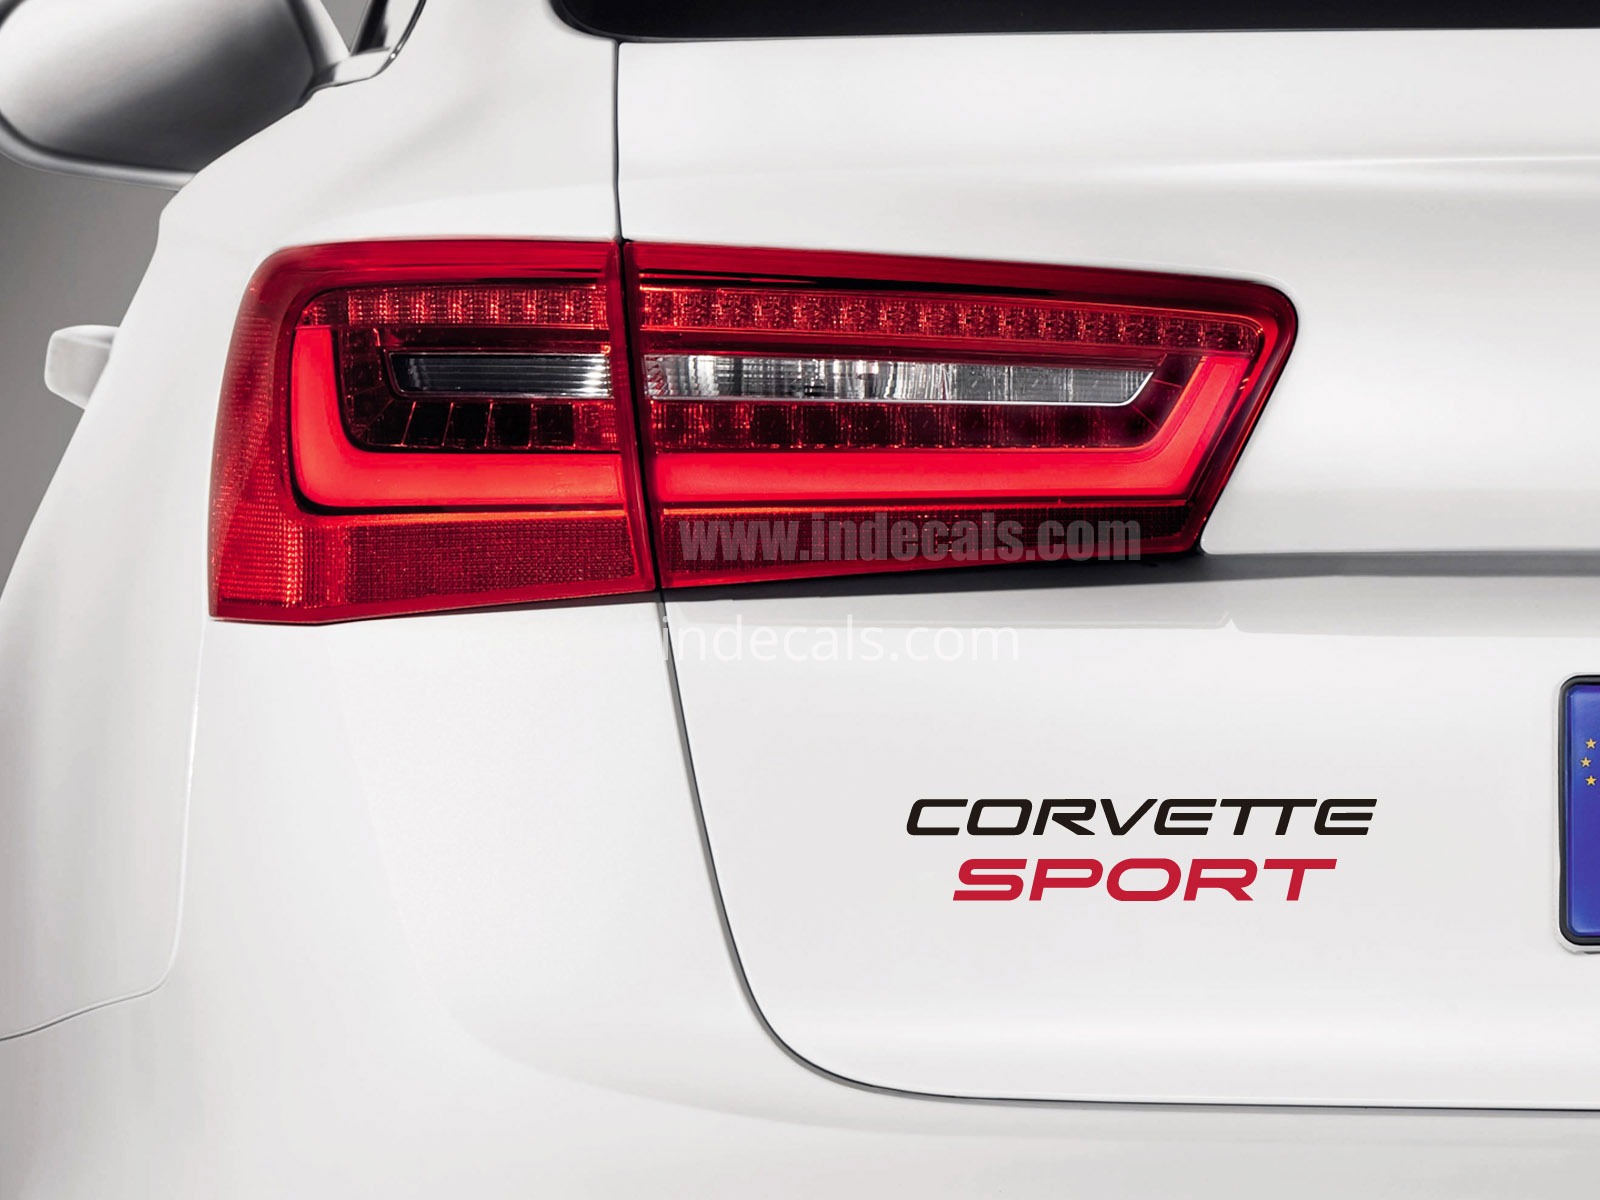 1 x Corvette Sports Sticker for Trunk - Black & Red